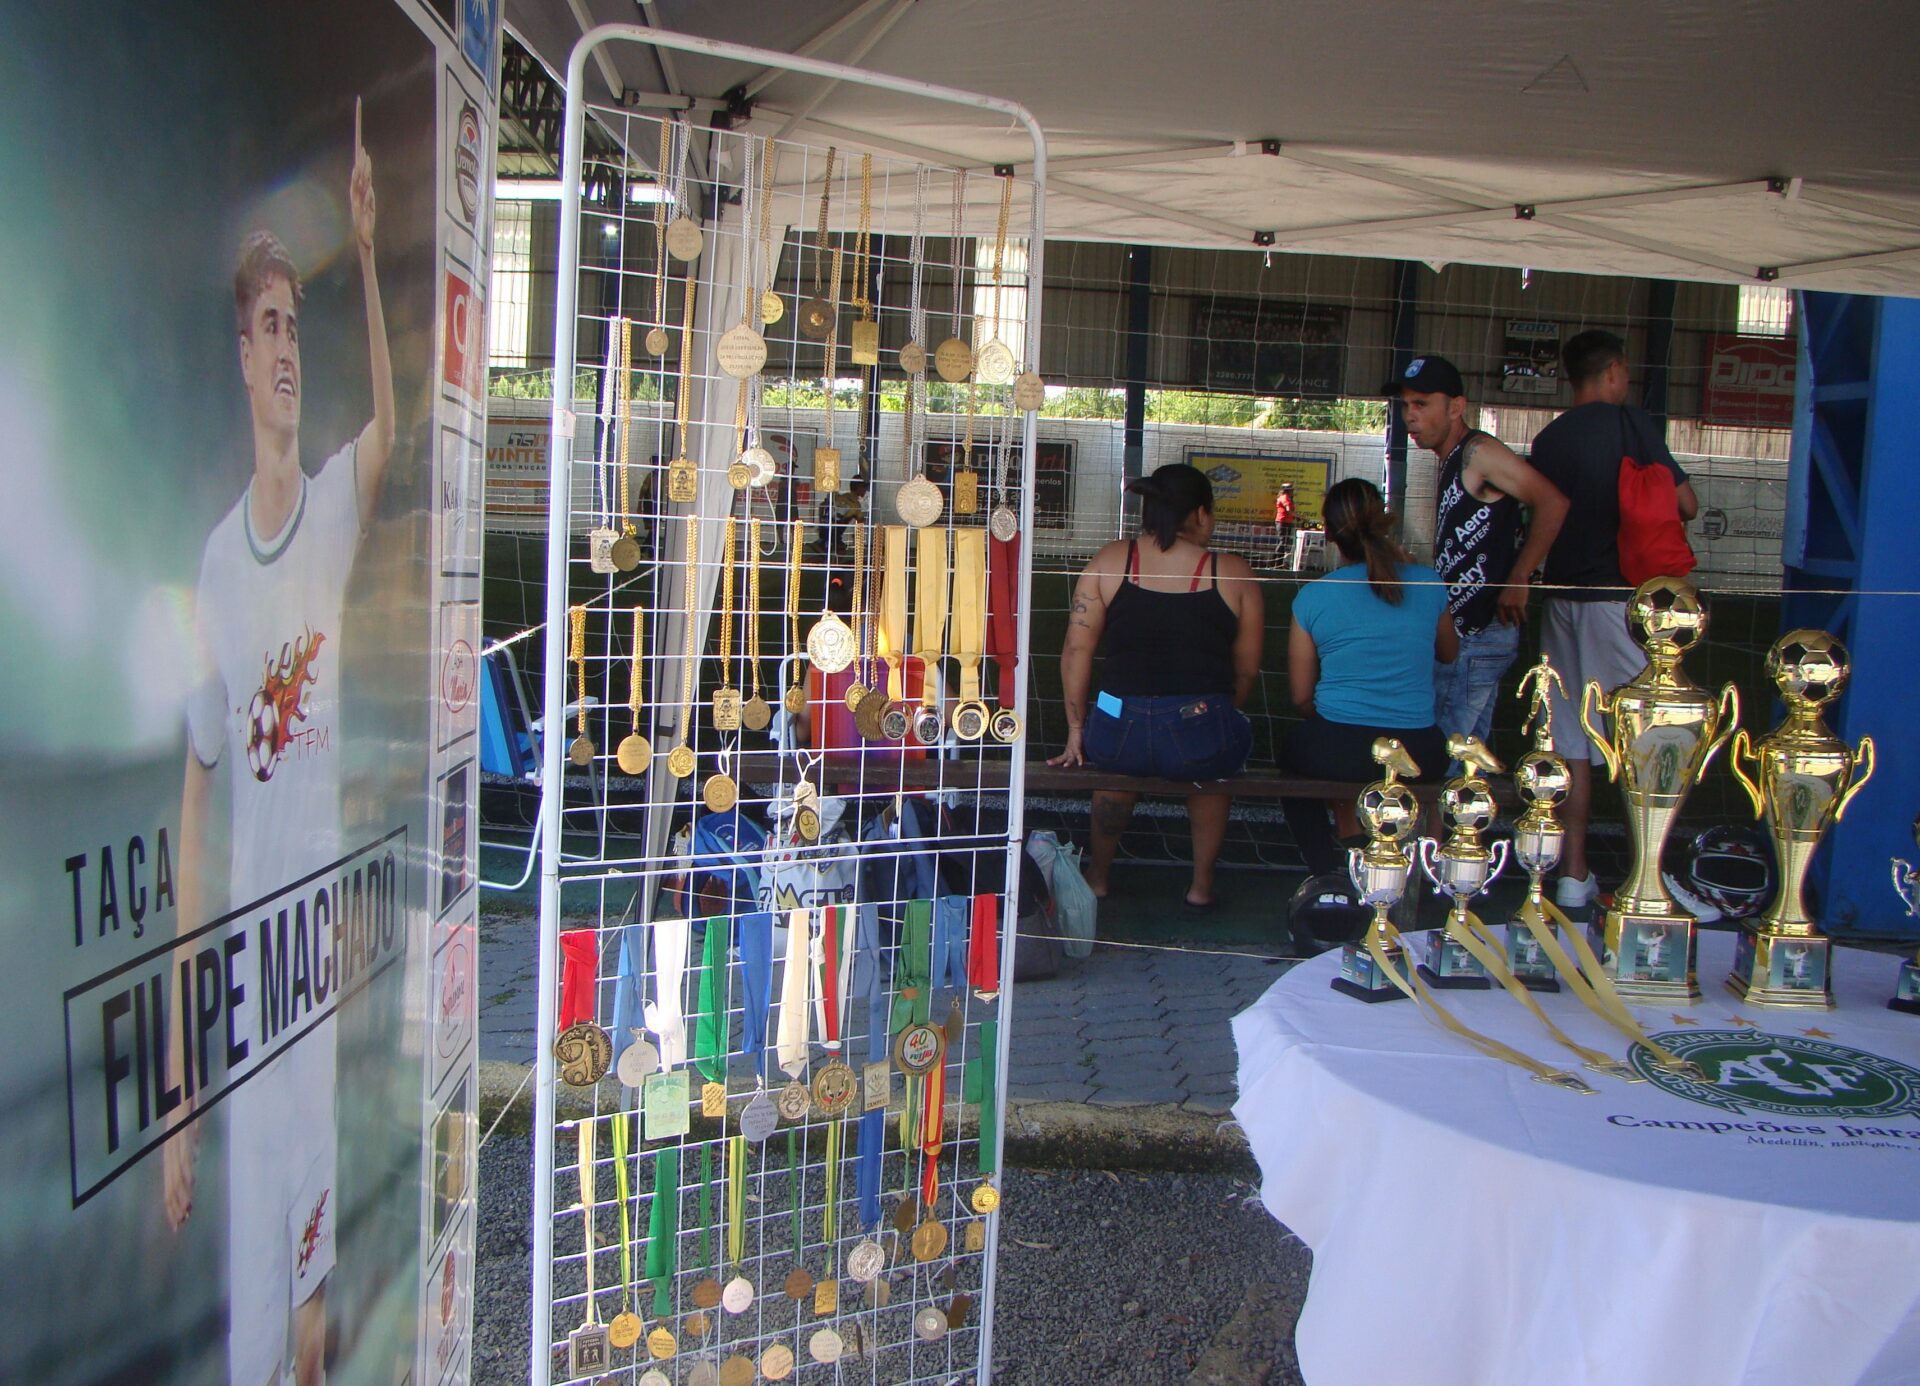 Público prestigia a Taça Filipe Machado em Gravataí